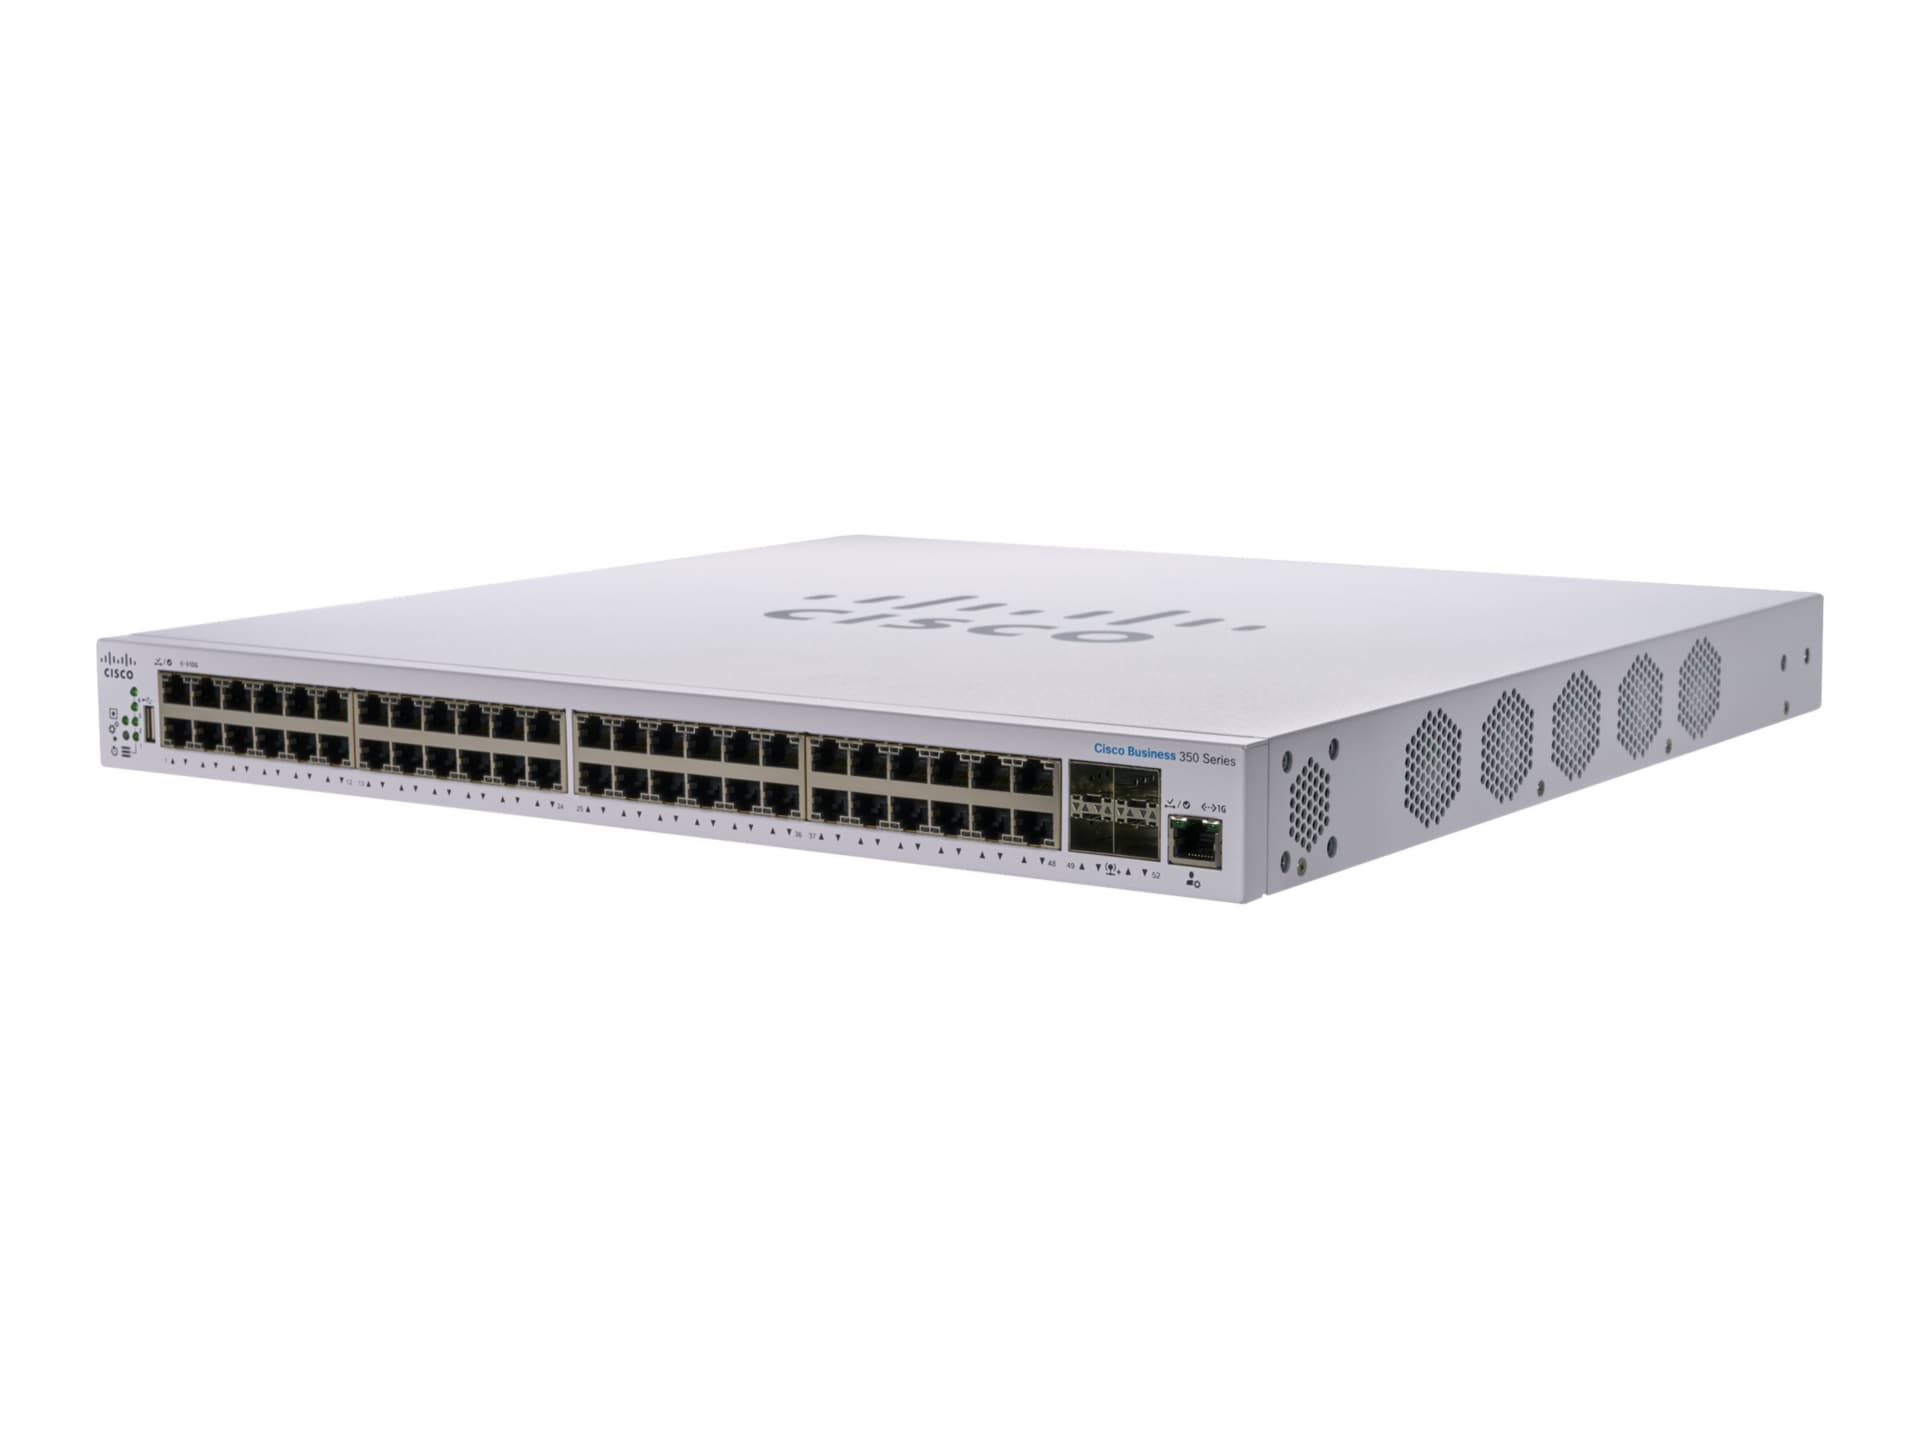 Cisco Business 350 Series CBS350-48XT-4X - switch - 48 ports - managed - rack-mountable